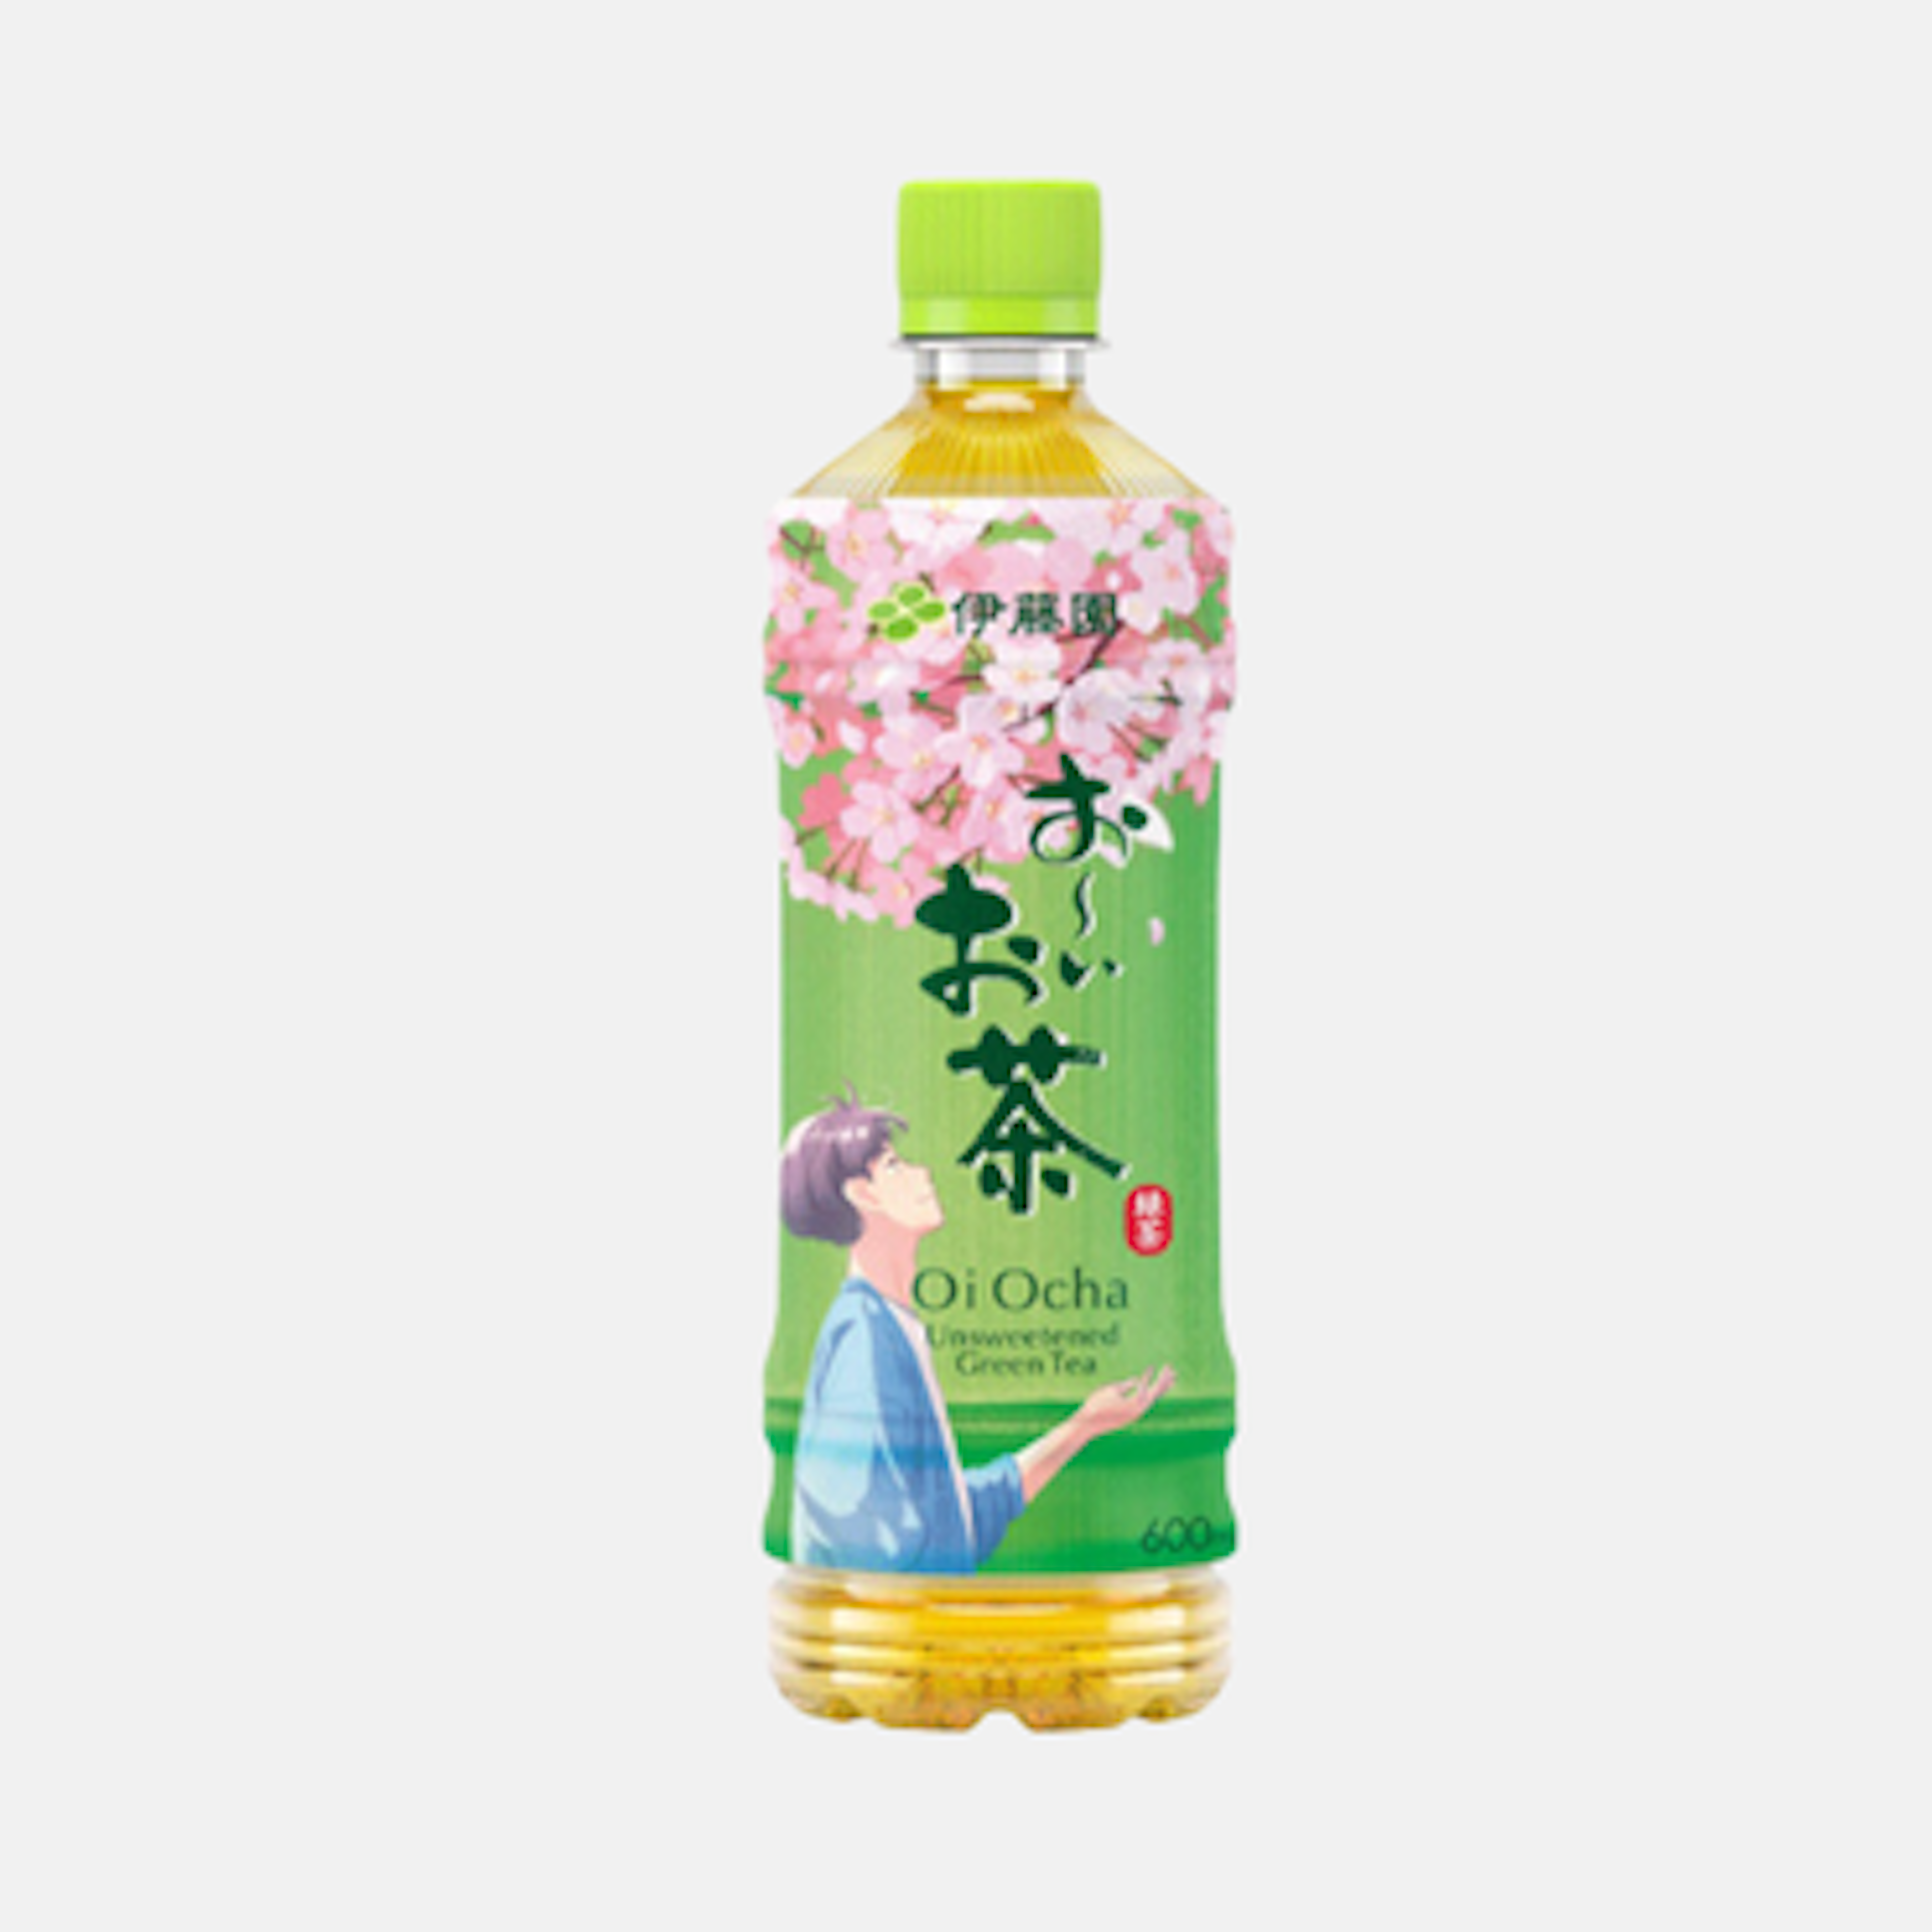 ITO EN Oi Ocha Ungesüßter Grüner Tee 600ml (Limited Edition) - Erfrischender grüner Tee aus Japan